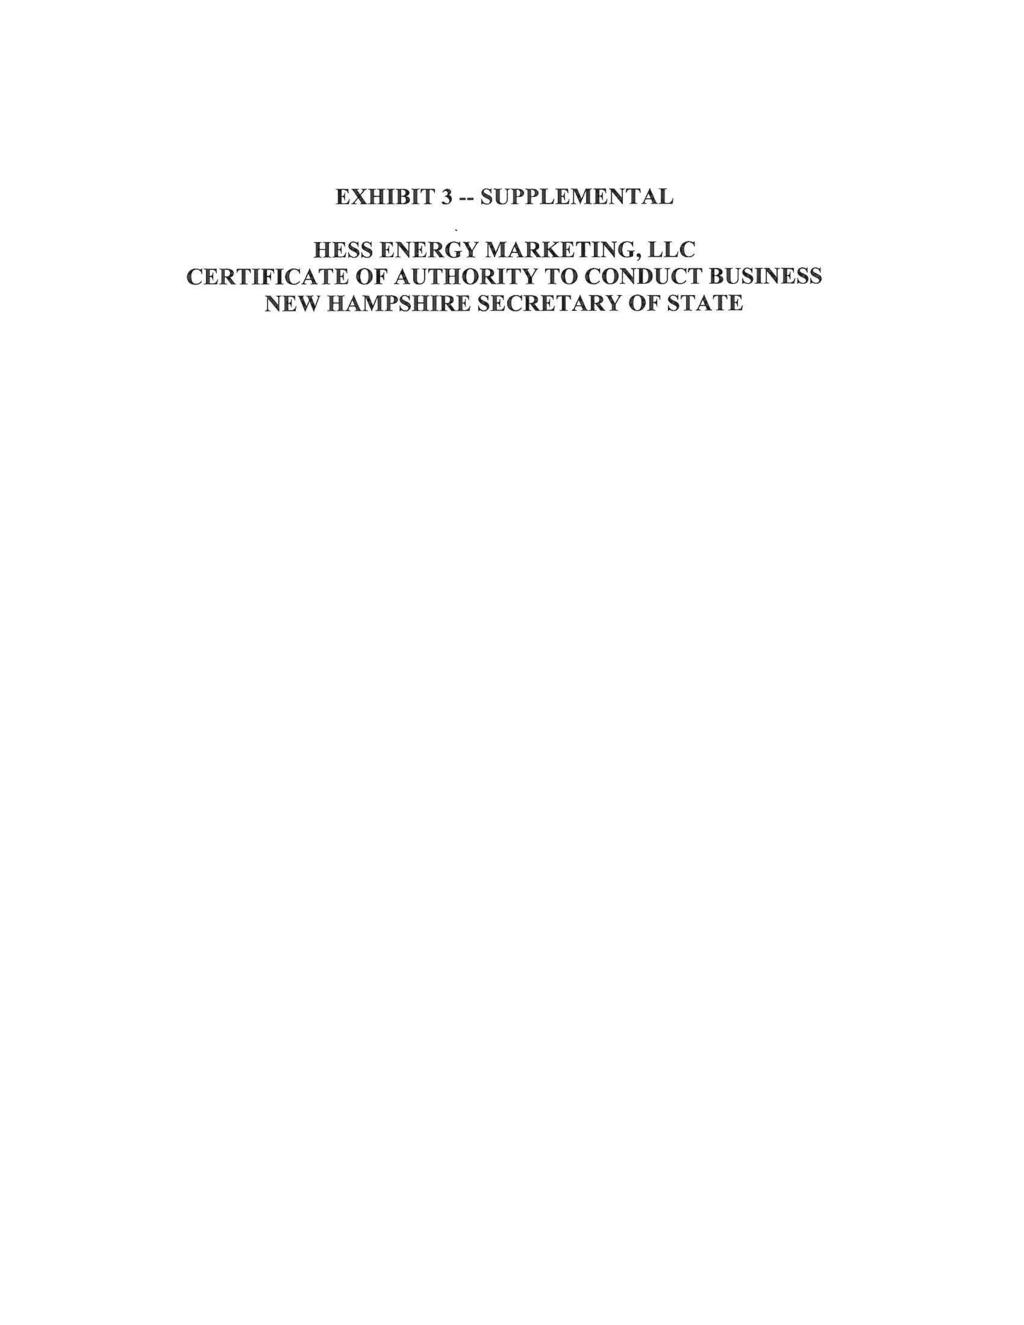 EXHIBIT 3-- SUPPLEMENTAL HESS ENERGY MARKETING, LLC CERTIFICATE